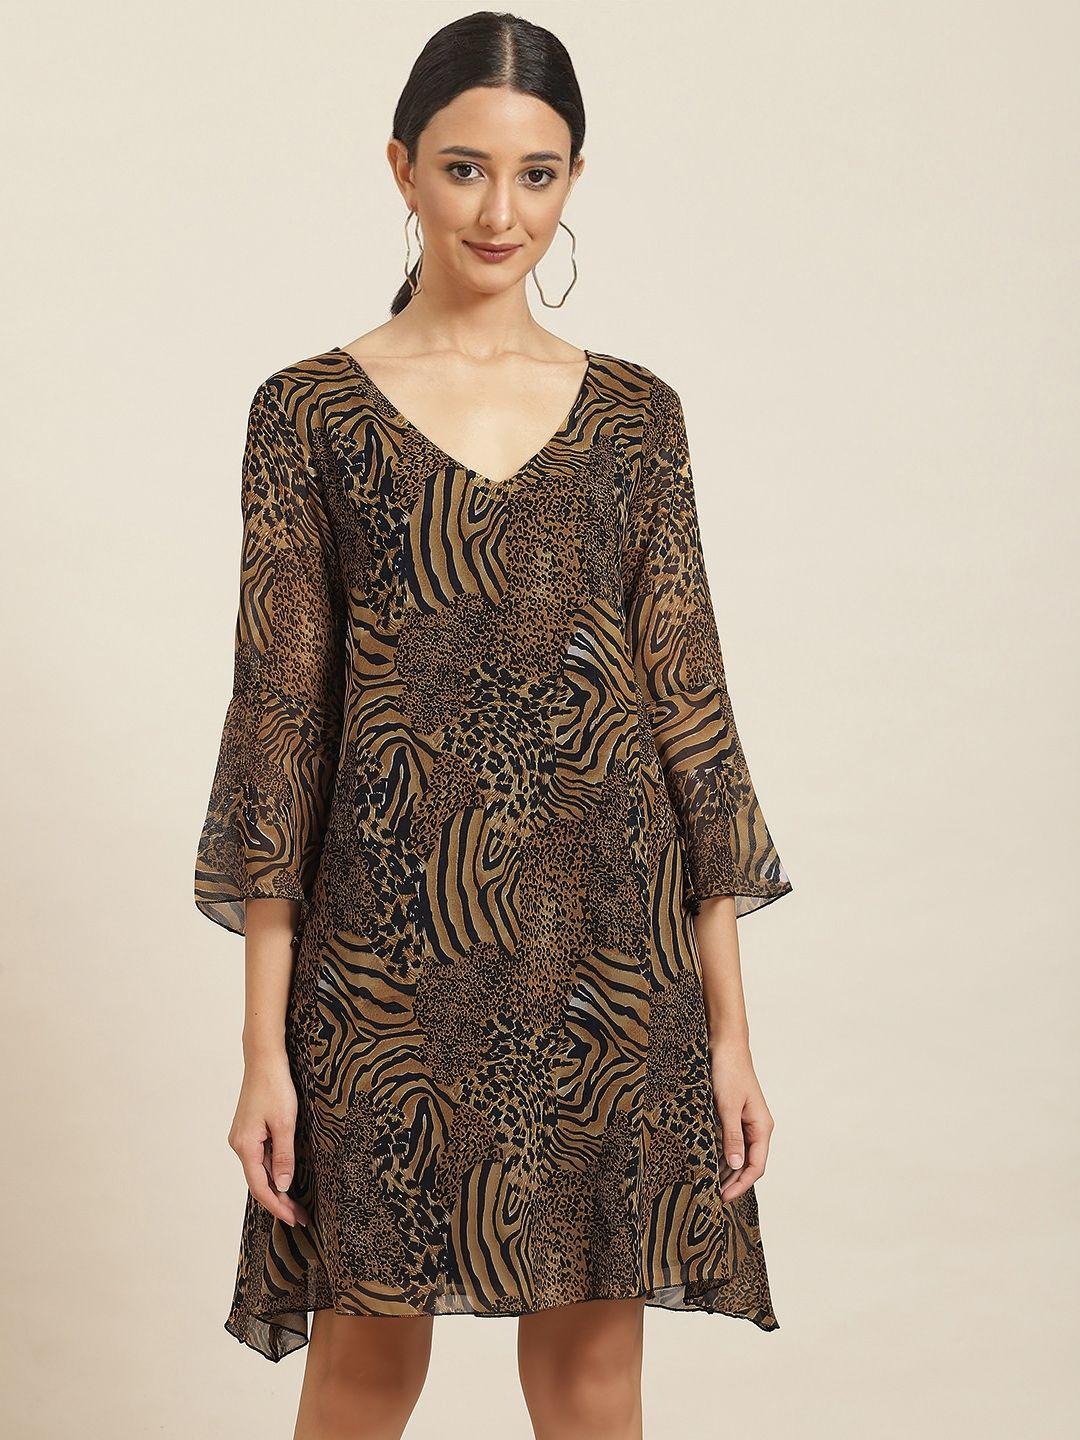 qurvii brown & black animal printed a-line dress